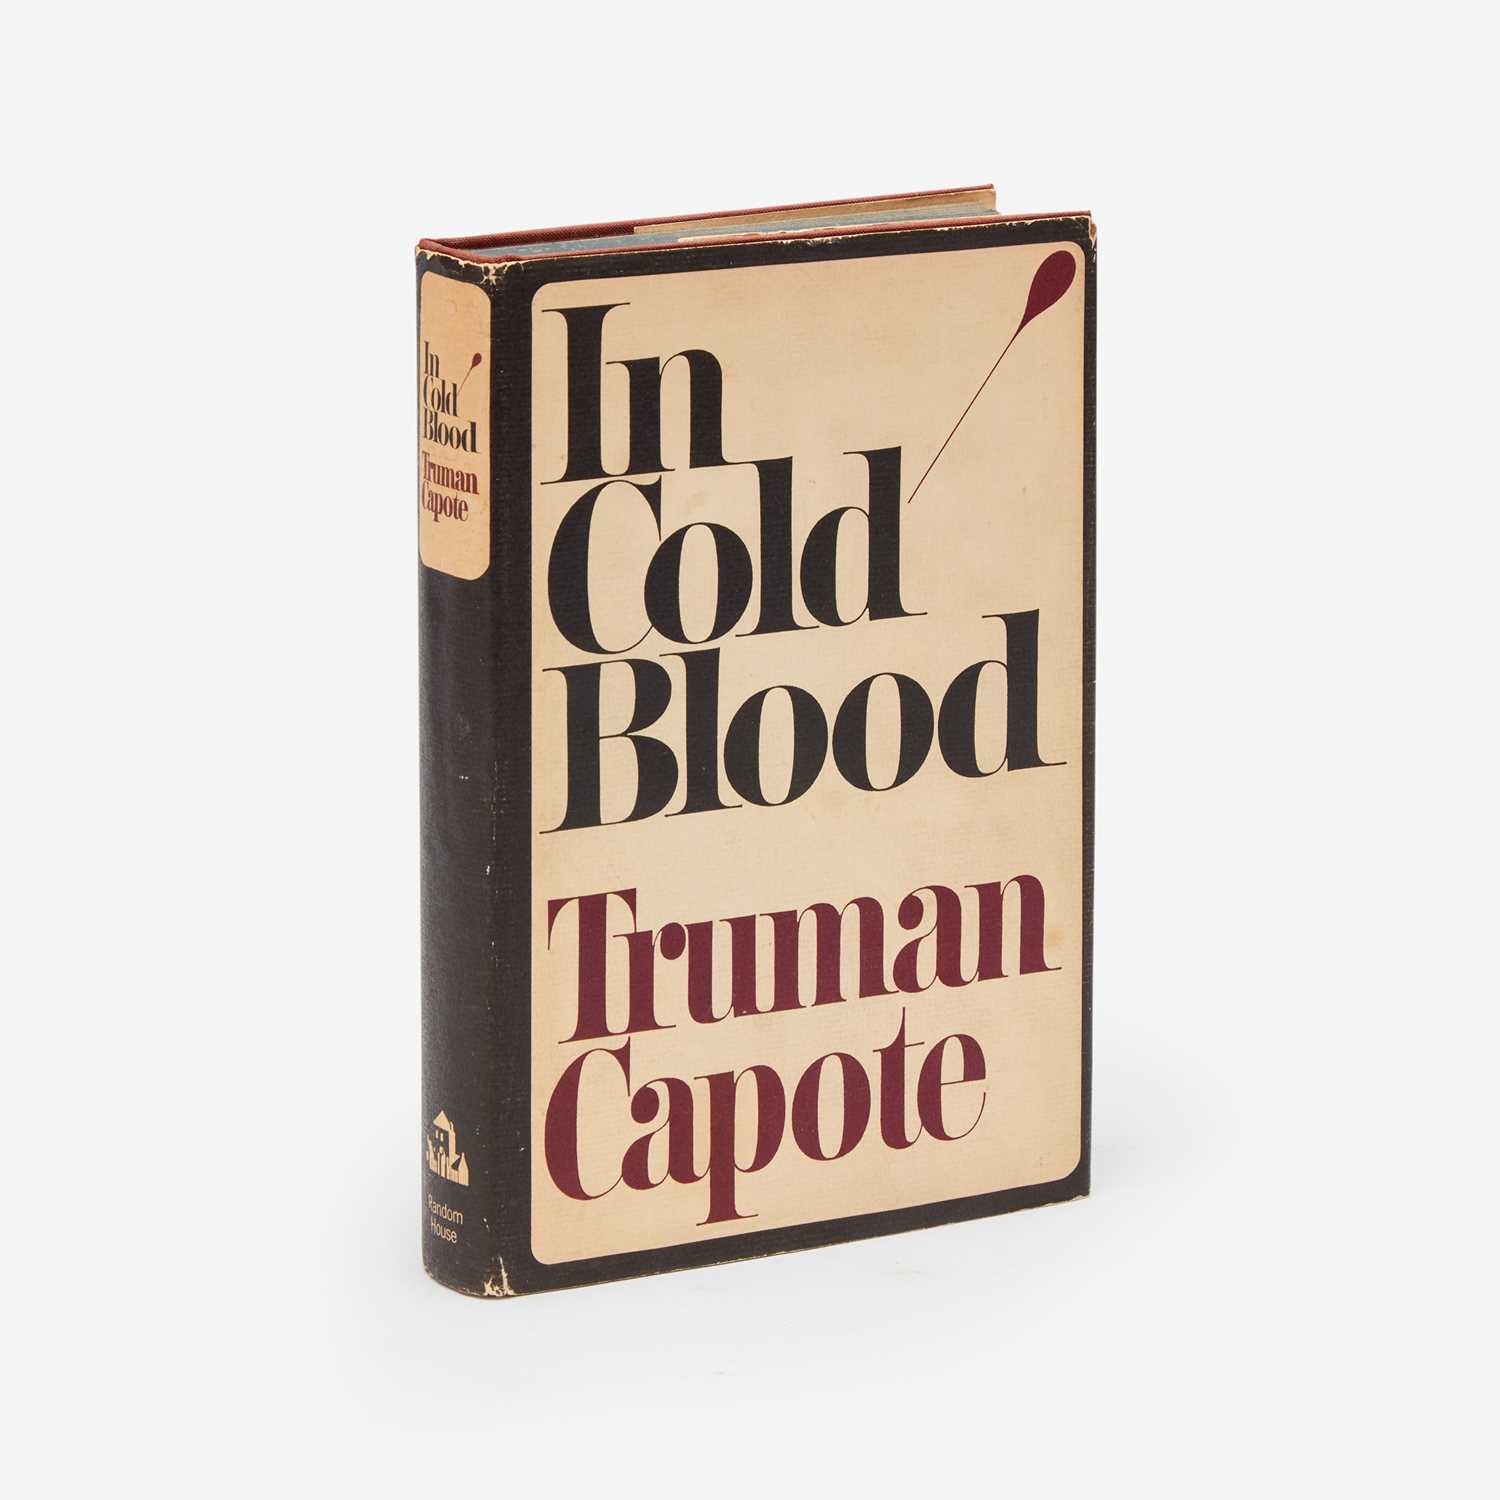 Lot 74 - [Literature] Capote, Truman